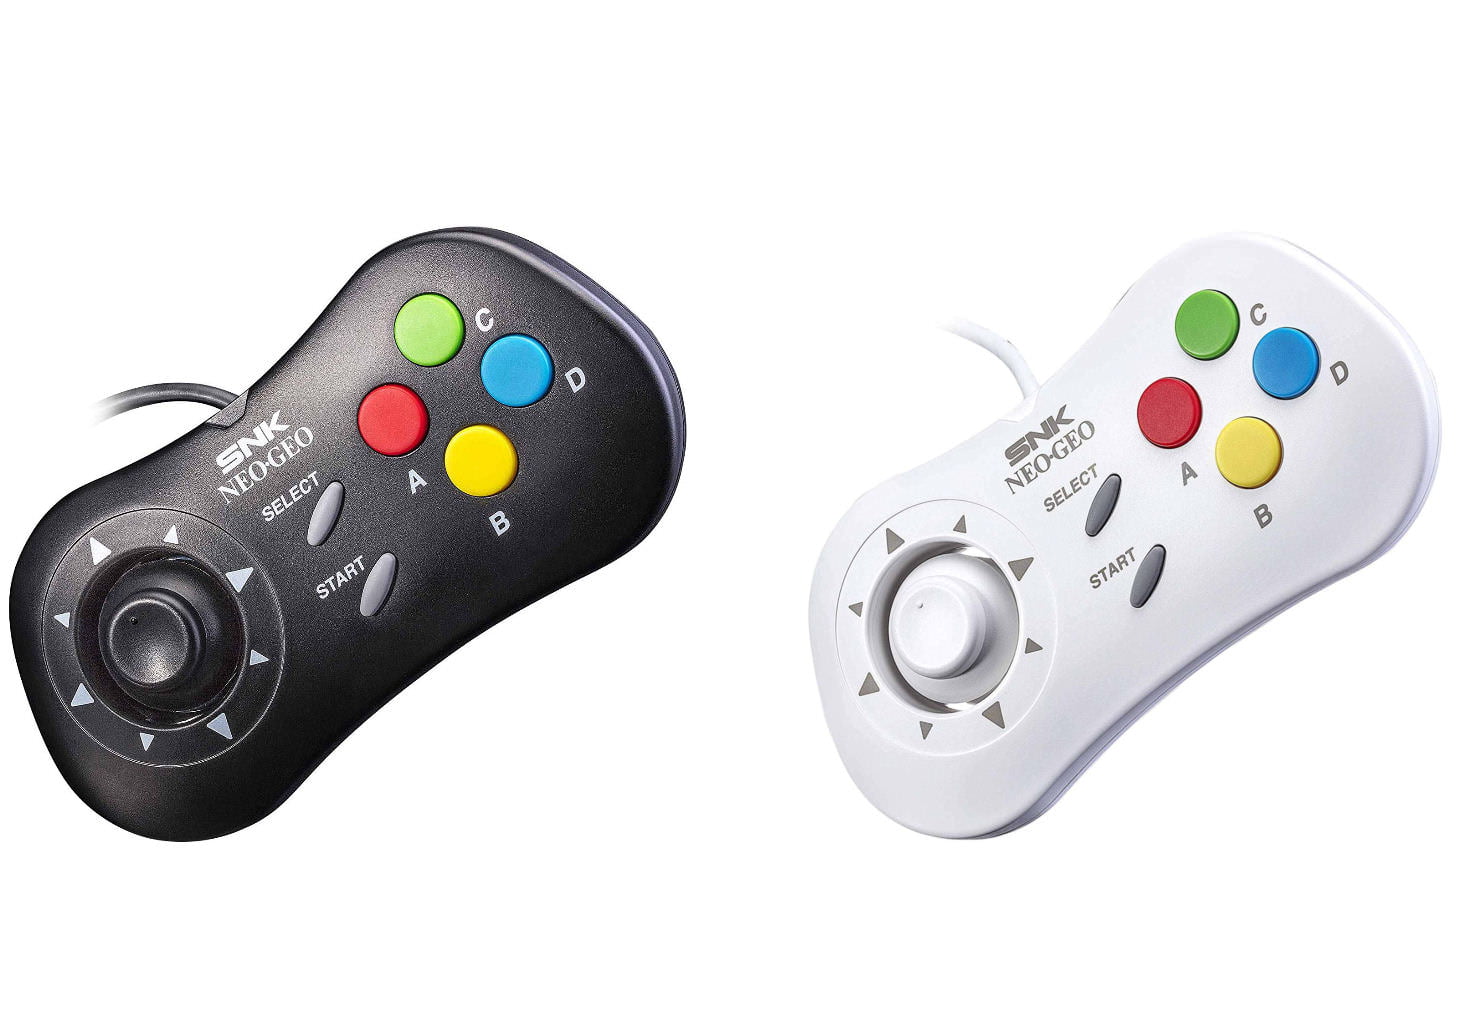 Neo Geo mini Pad Controller White Snk Controller for Neo Geo mini New  Article